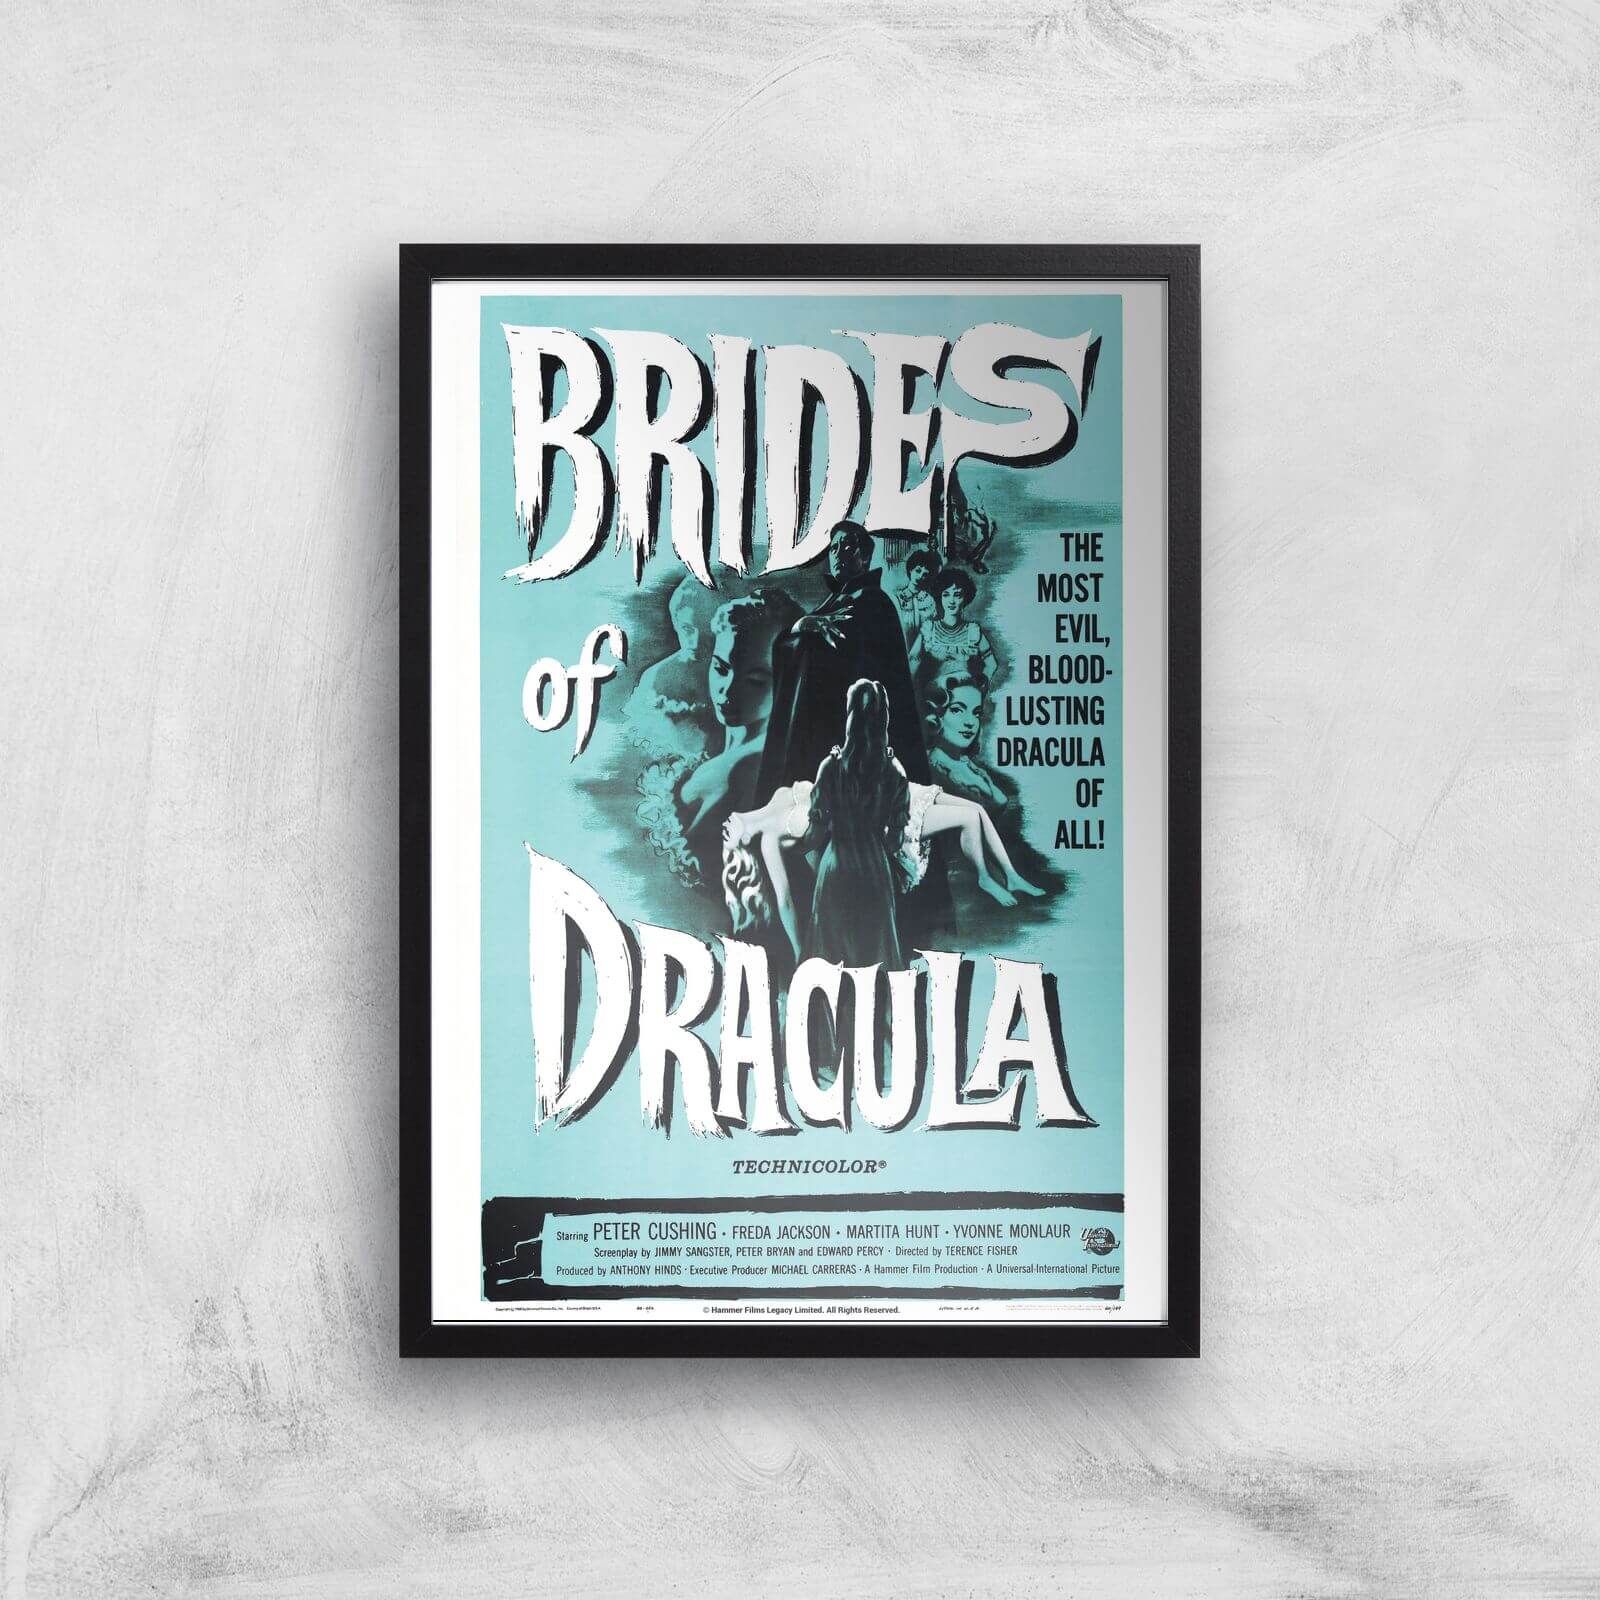 Brides Of Dracula Giclee Art Print - A3 - Black Frame